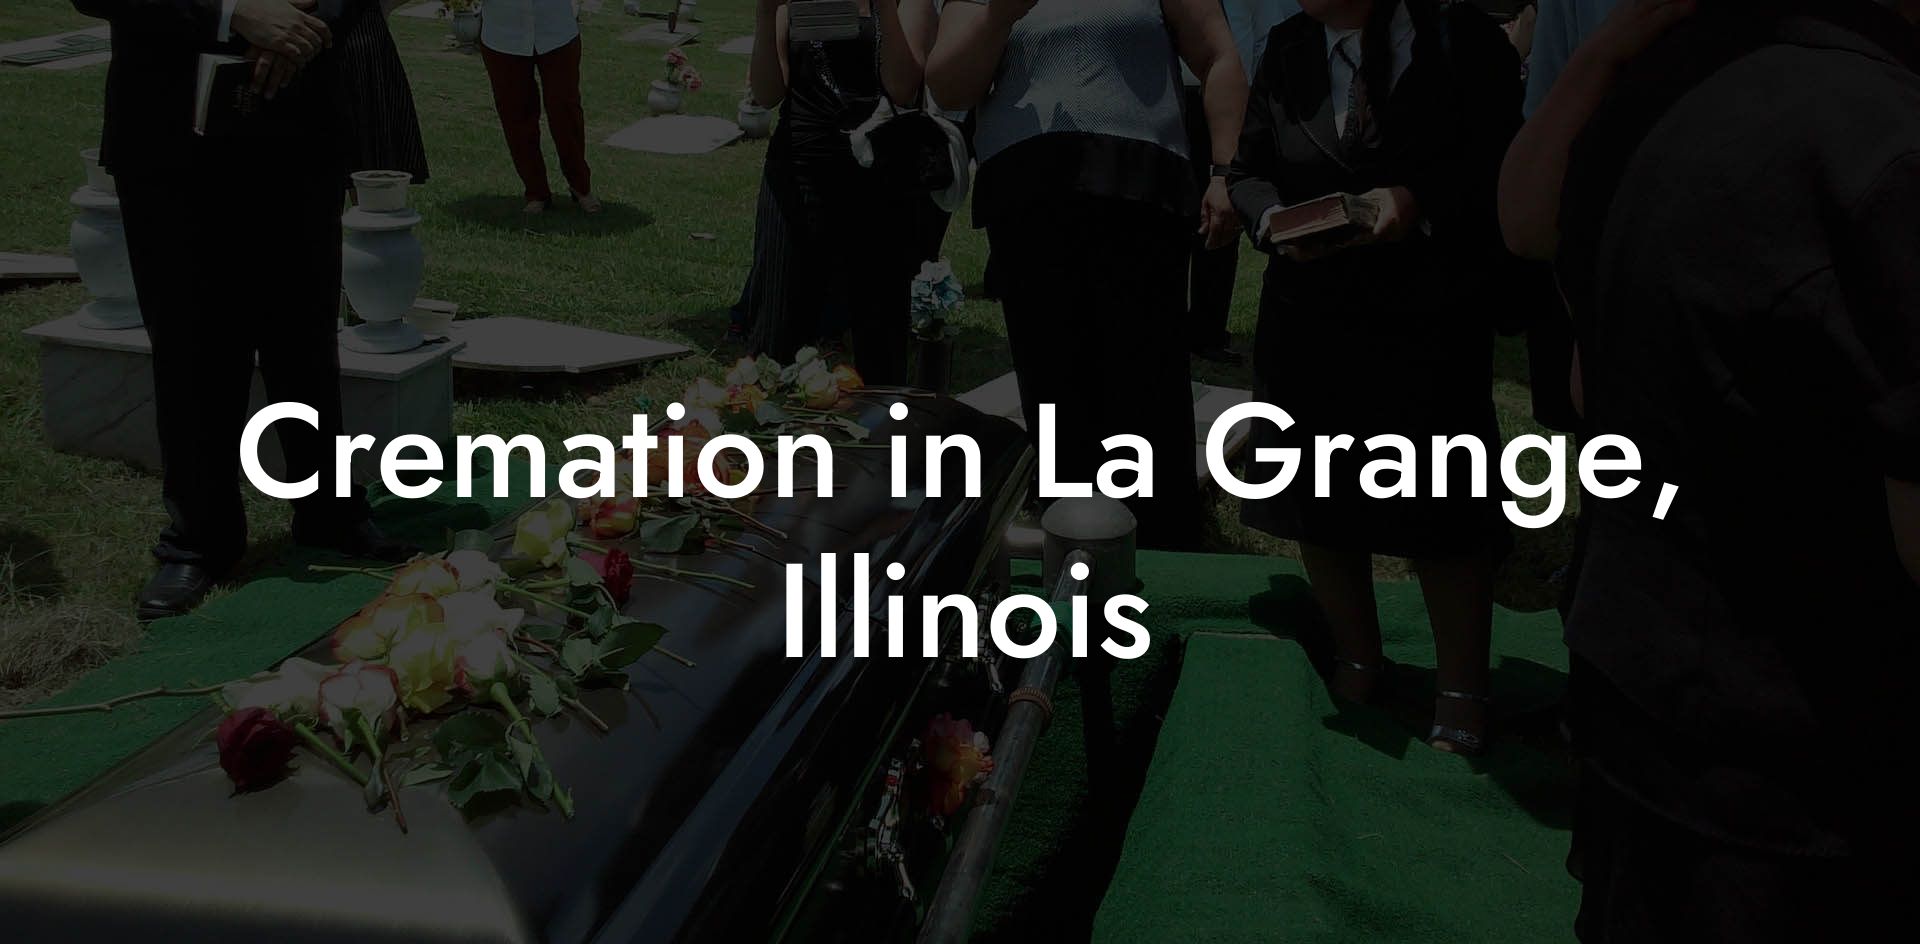 Cremation in La Grange, Illinois